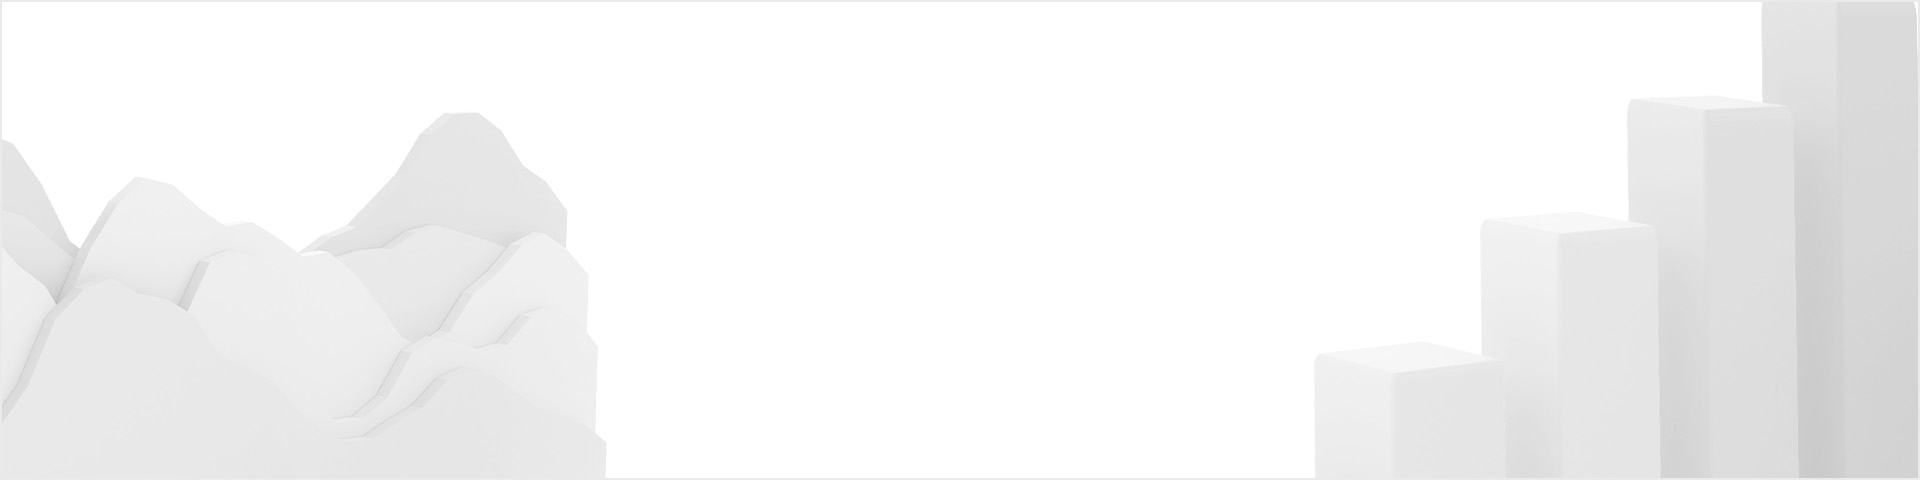 「SHINRYO 1 MINUTES CONTENTS　1分でわかる新菱冷熱」の写真